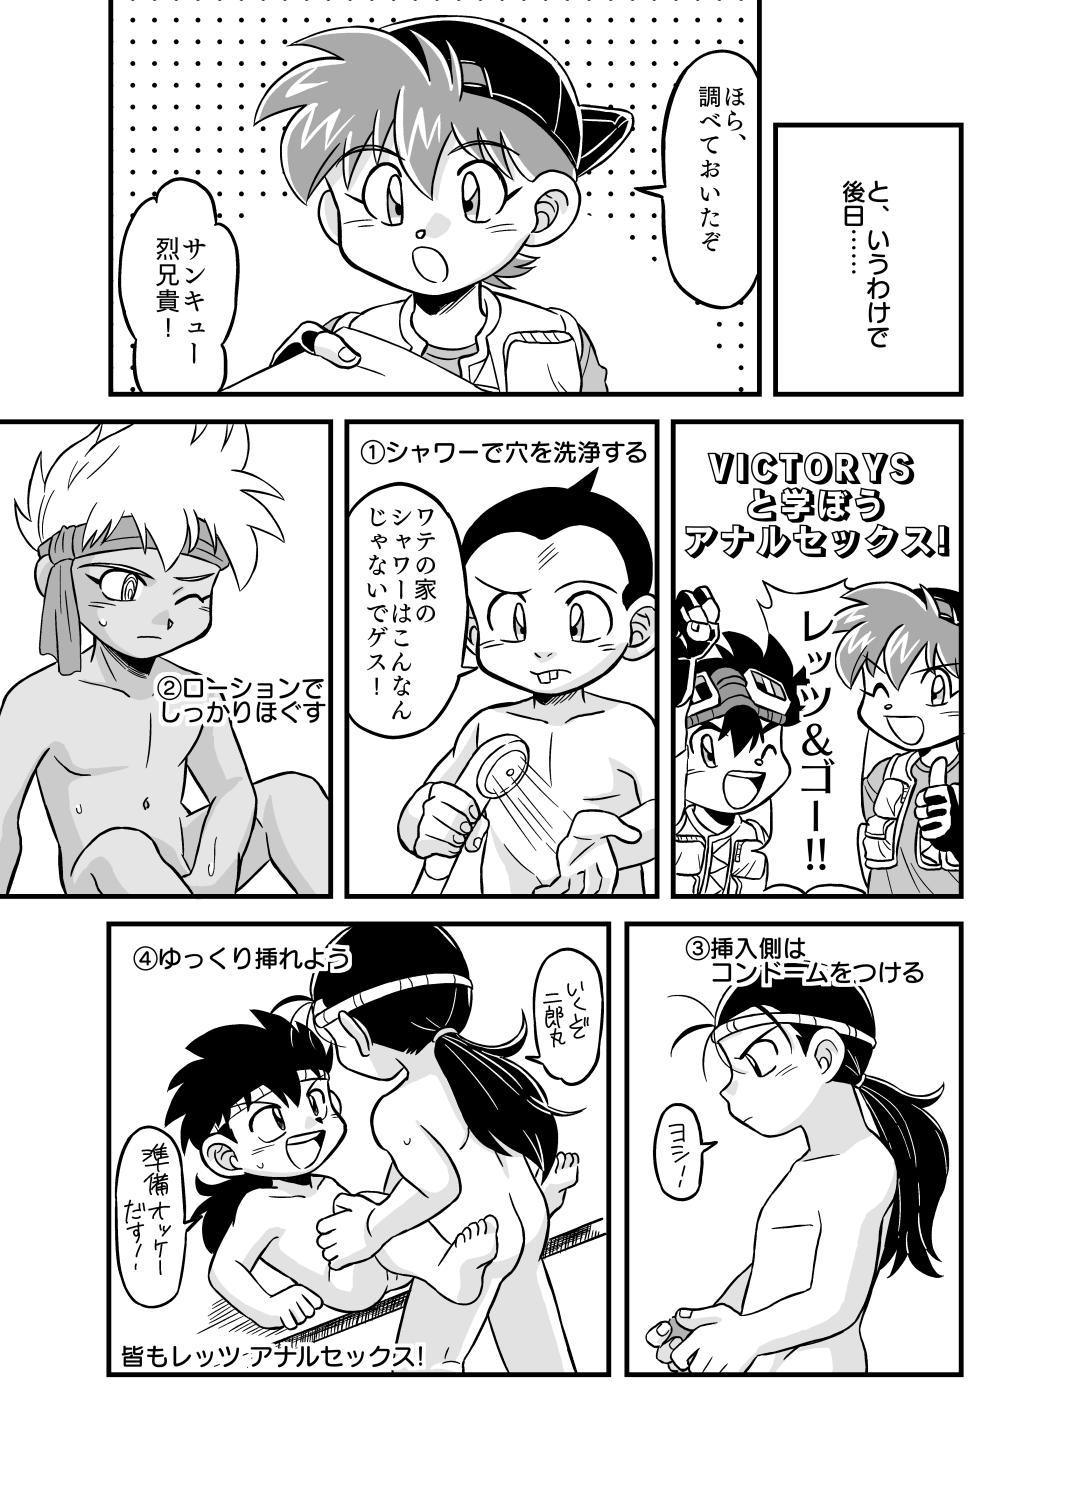 Hidden 性の世界へレッツゴー!! - Bakusou kyoudai lets and go Spa - Page 6